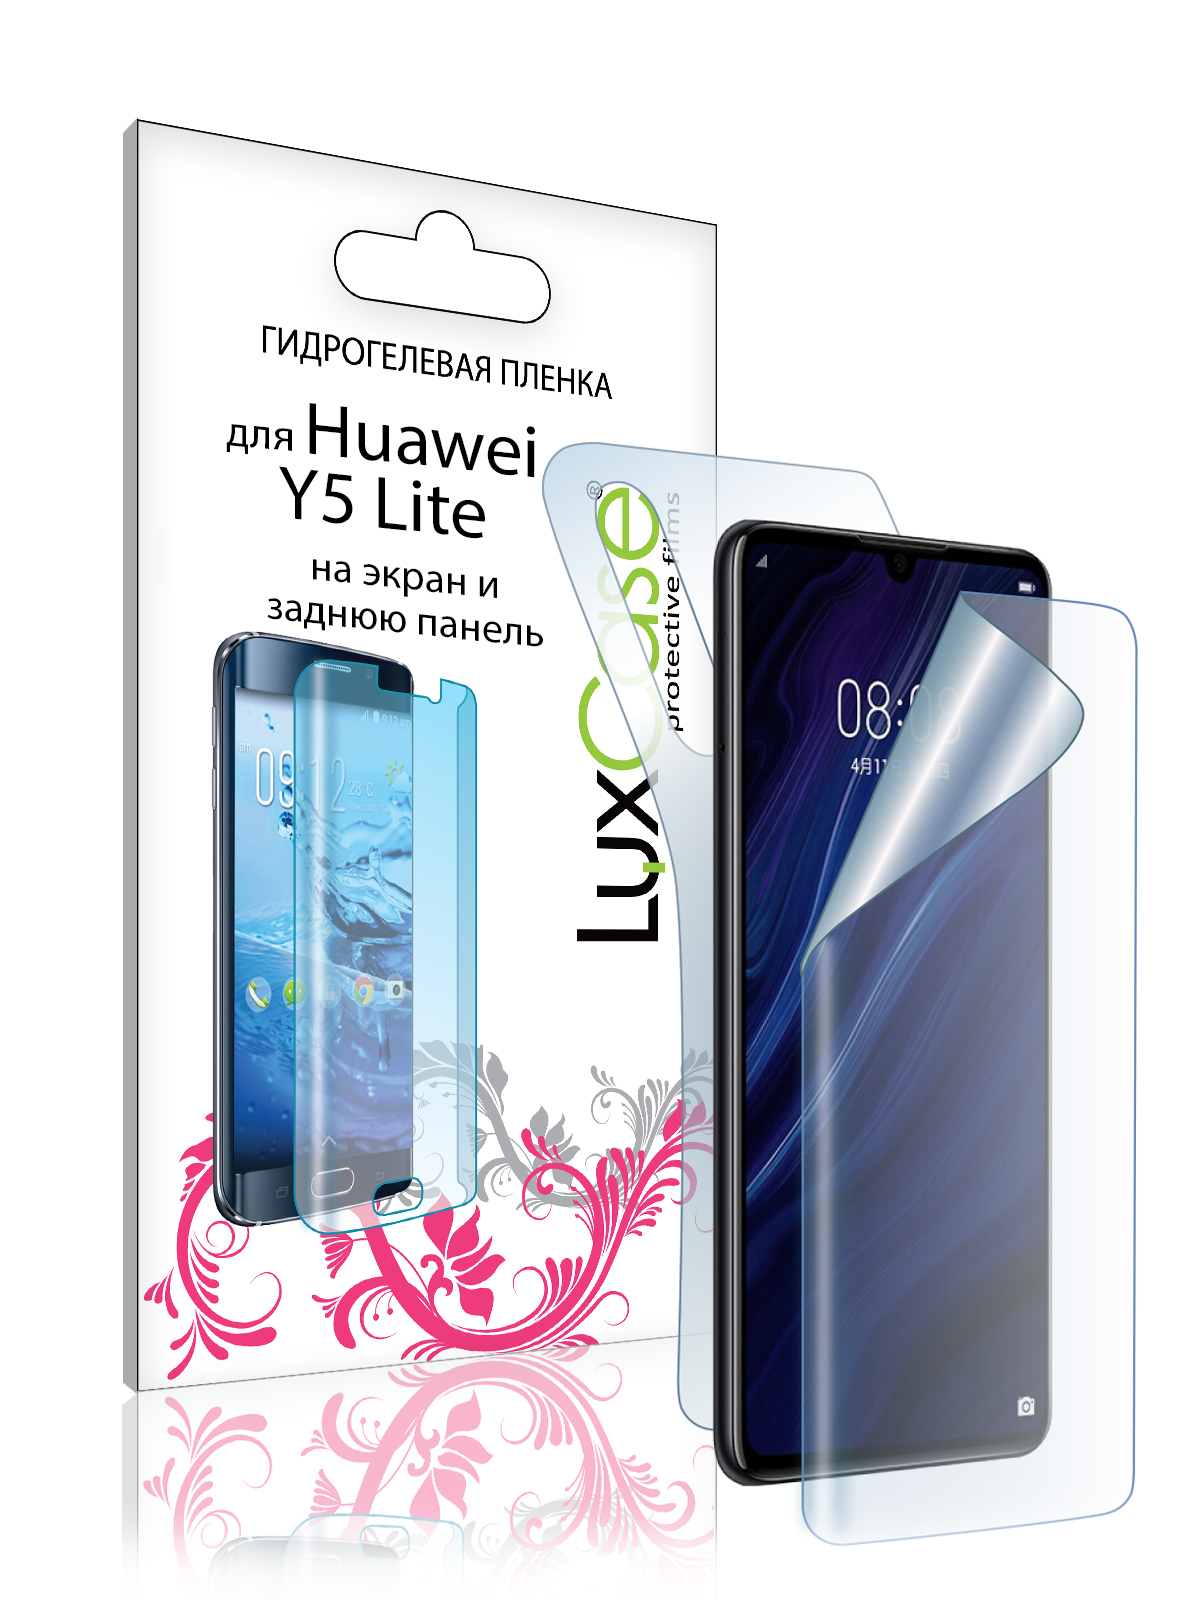 Пленка гидрогелевая LuxCase для Huawei Y5 Lite 0.14mm Front and Back Transperent Huawei Y5 Lite гидрогелевая пленка mitrifon для экрана huawei y5 2017 матовая